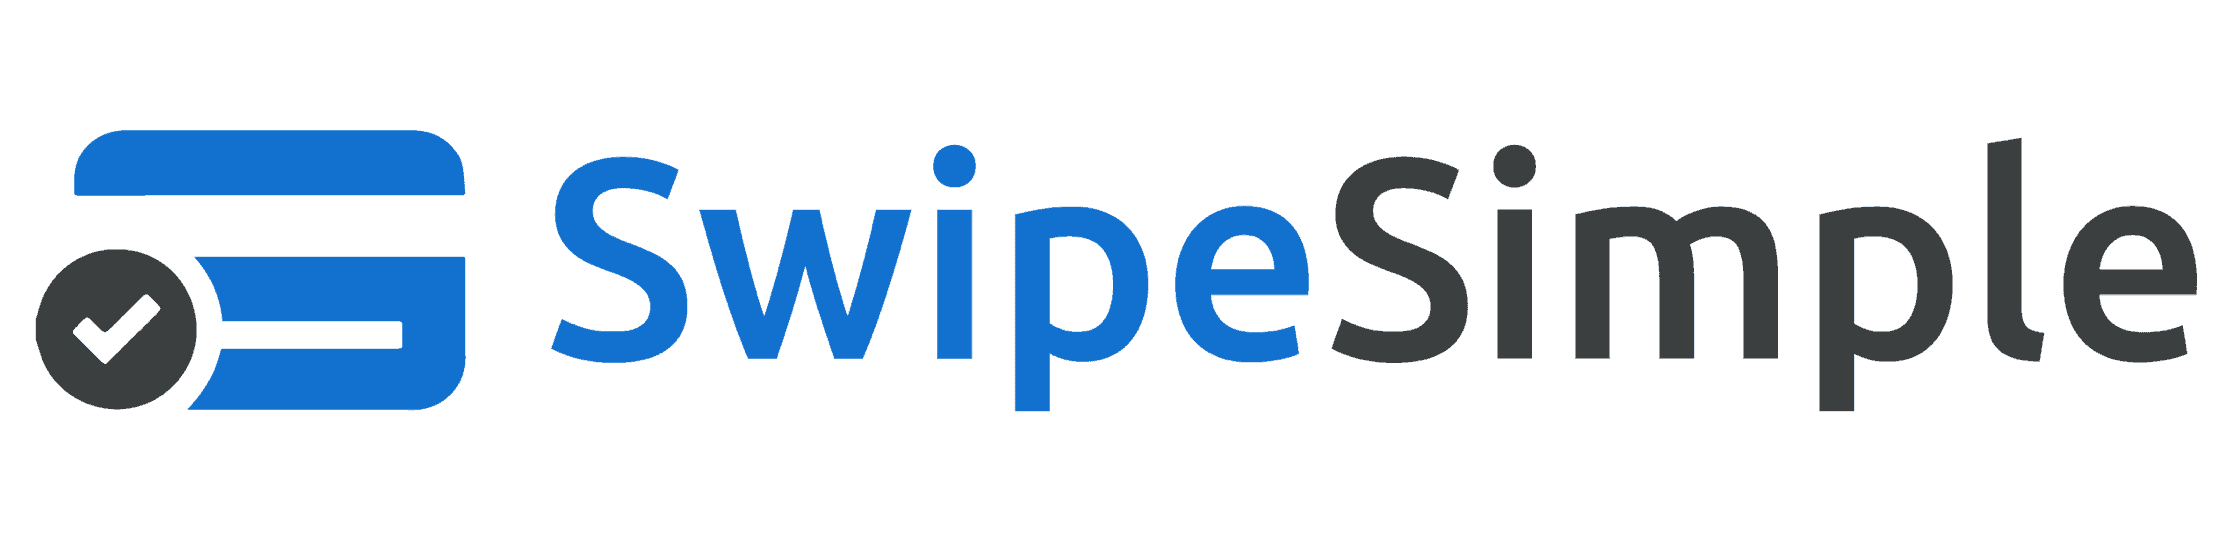 https://www.hostmerchantservices.com/wp-content/uploads/2014/09/swipesimple_logo.png